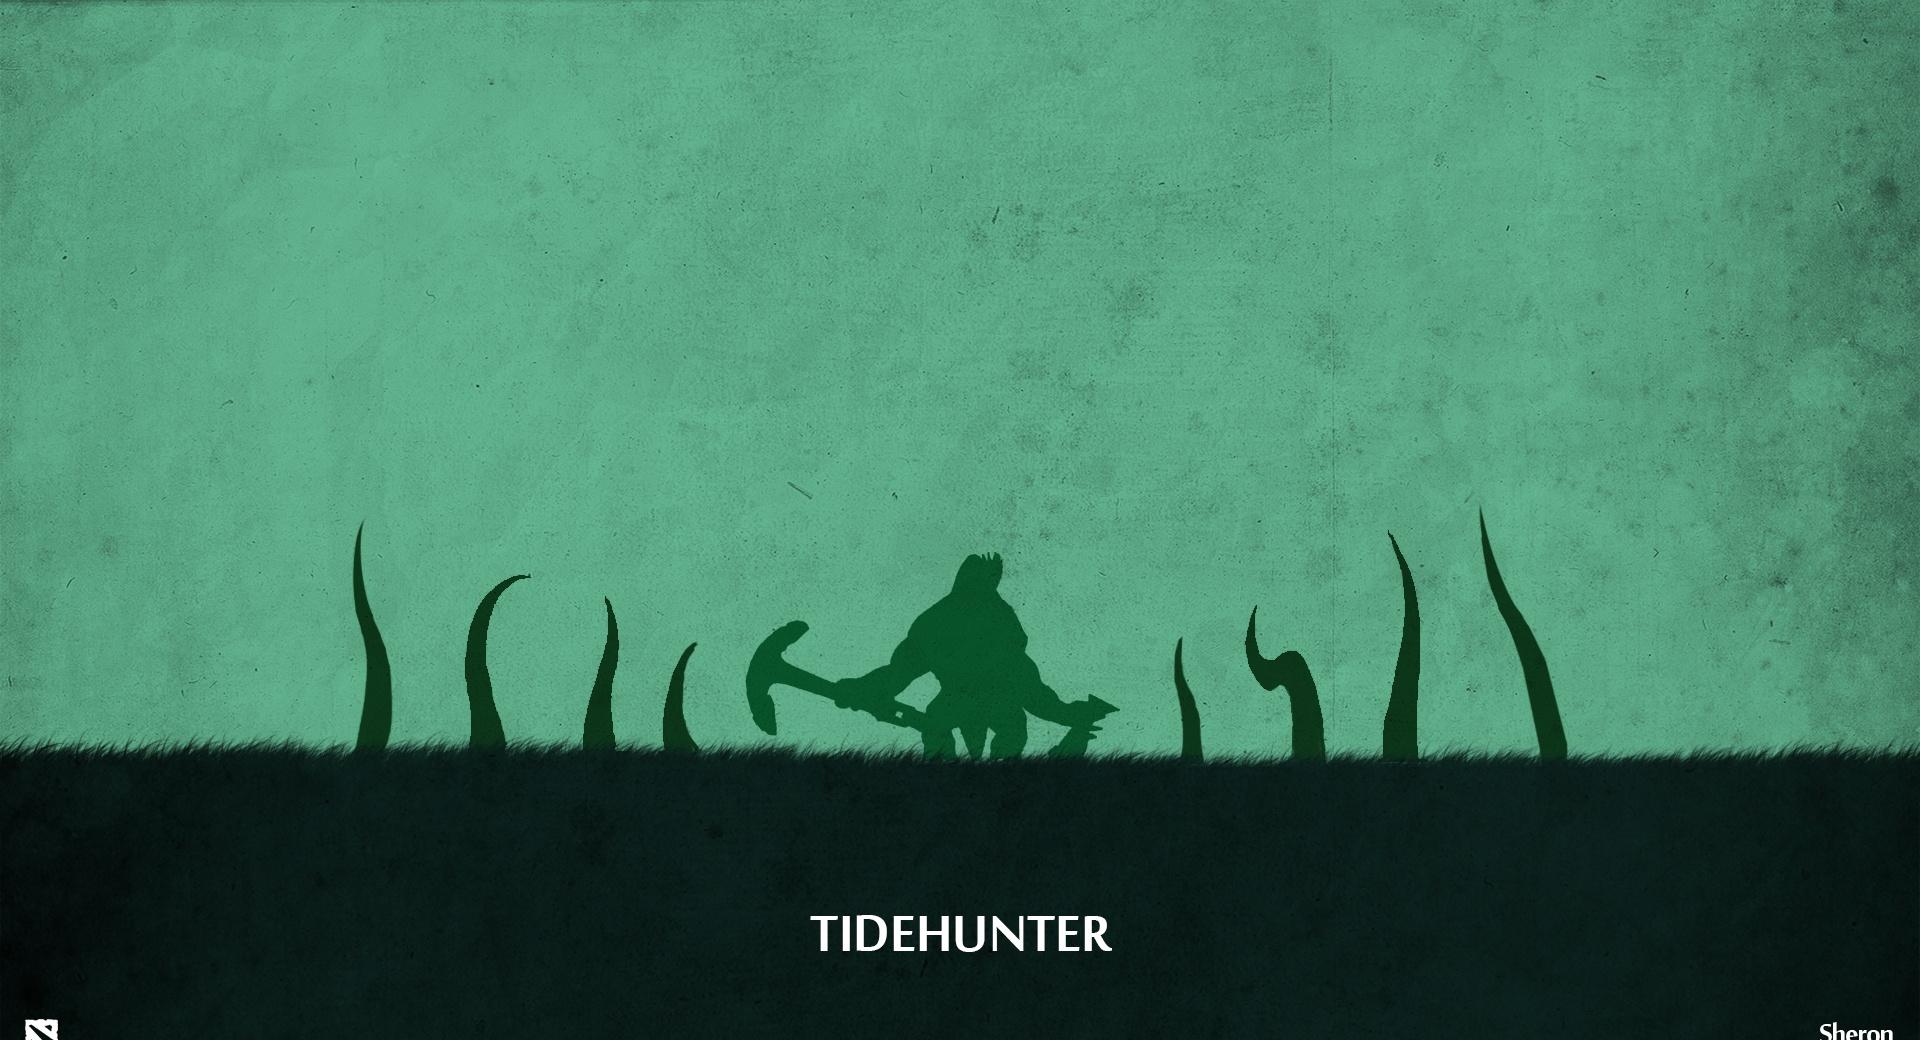 Tidehunter - DotA 2 at 1024 x 768 size wallpapers HD quality